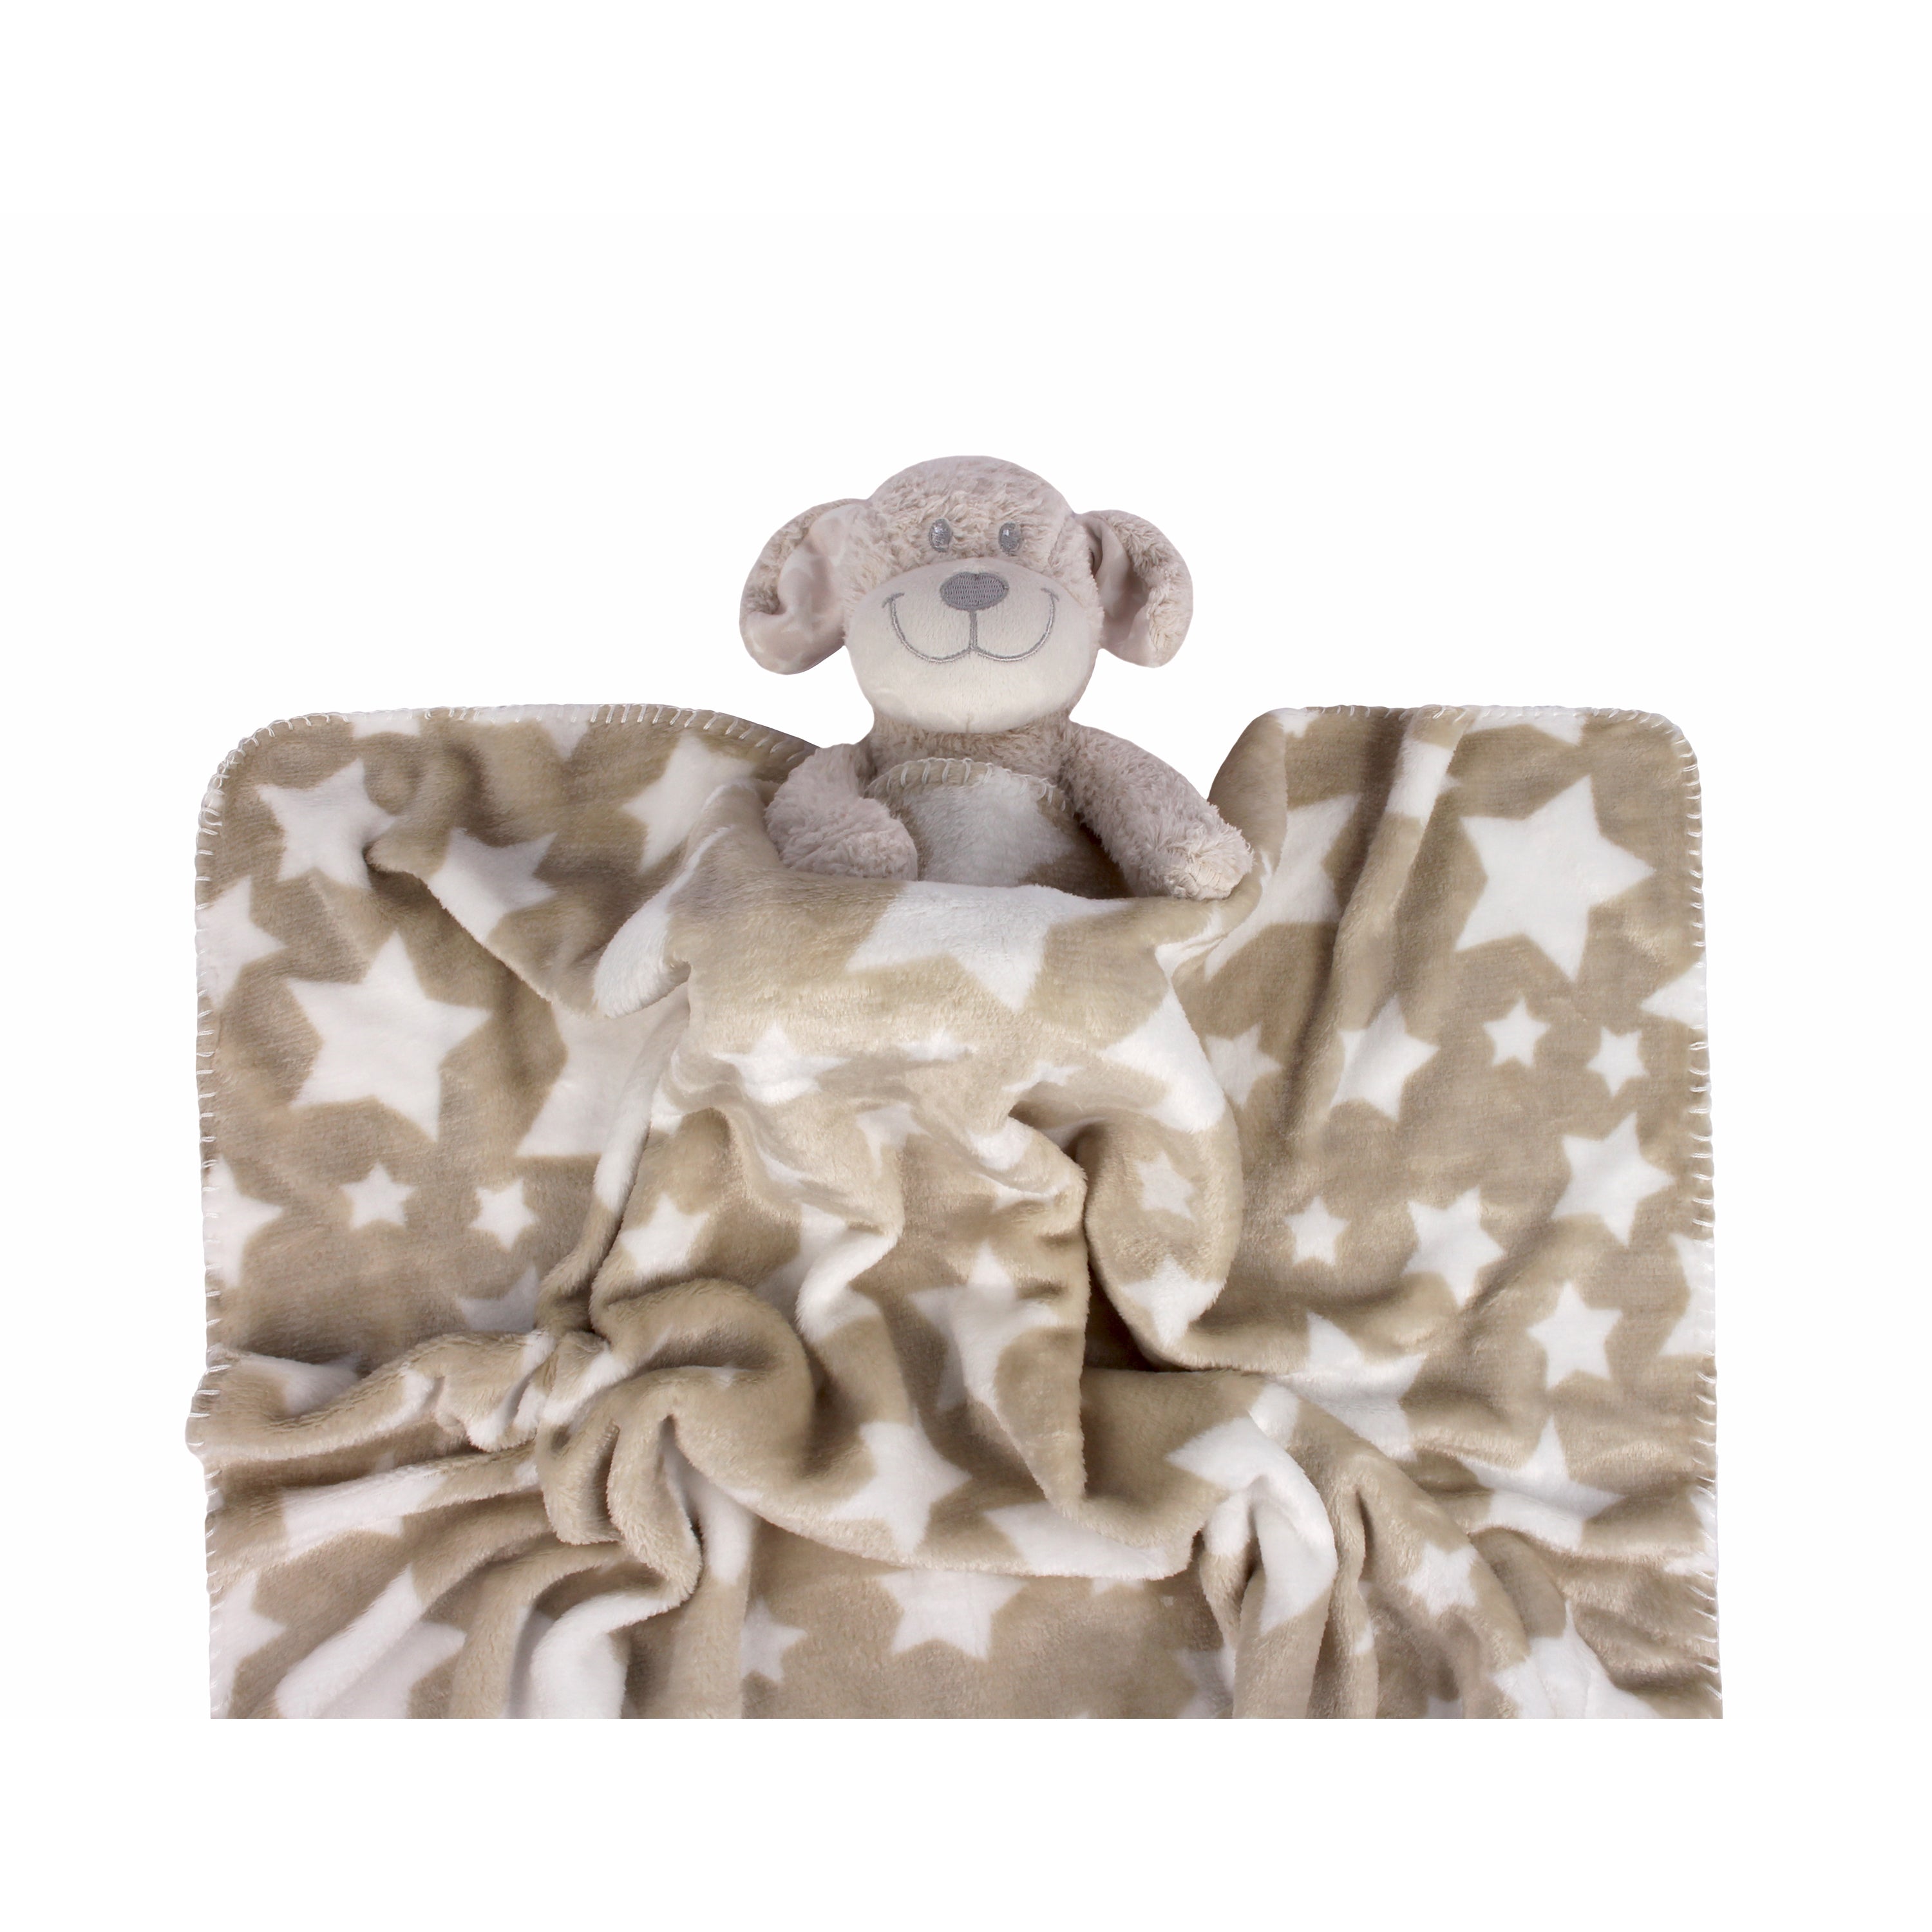 Abracadabra Toy With Blanket - Dog